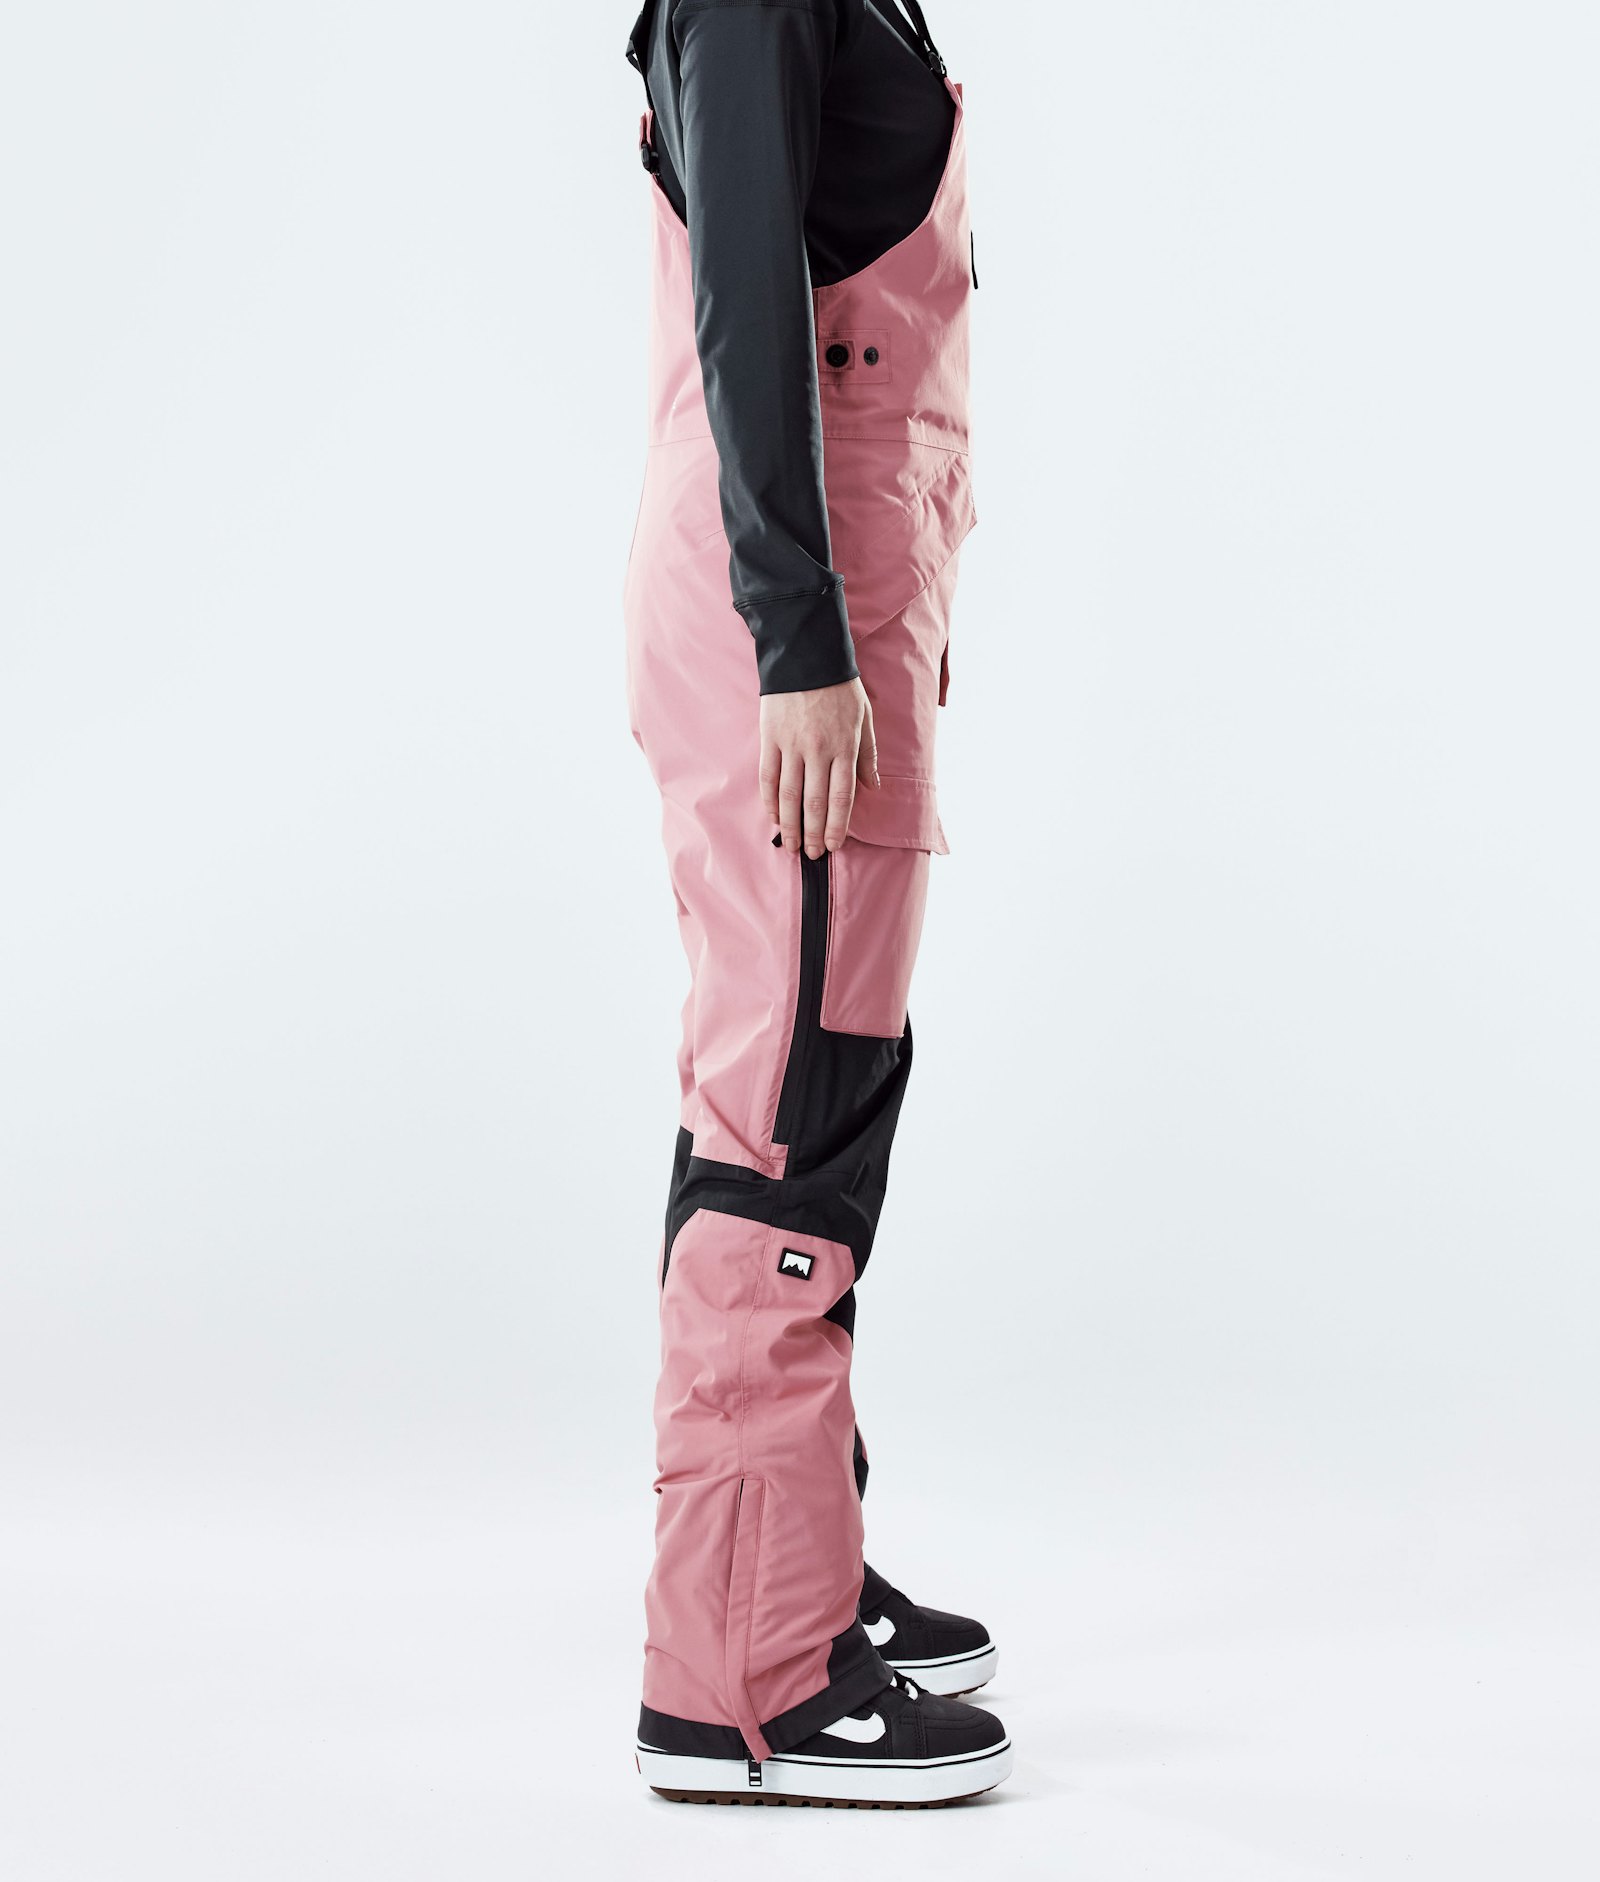 Fawk W 2020 Snowboard Pants Women Pink/Black